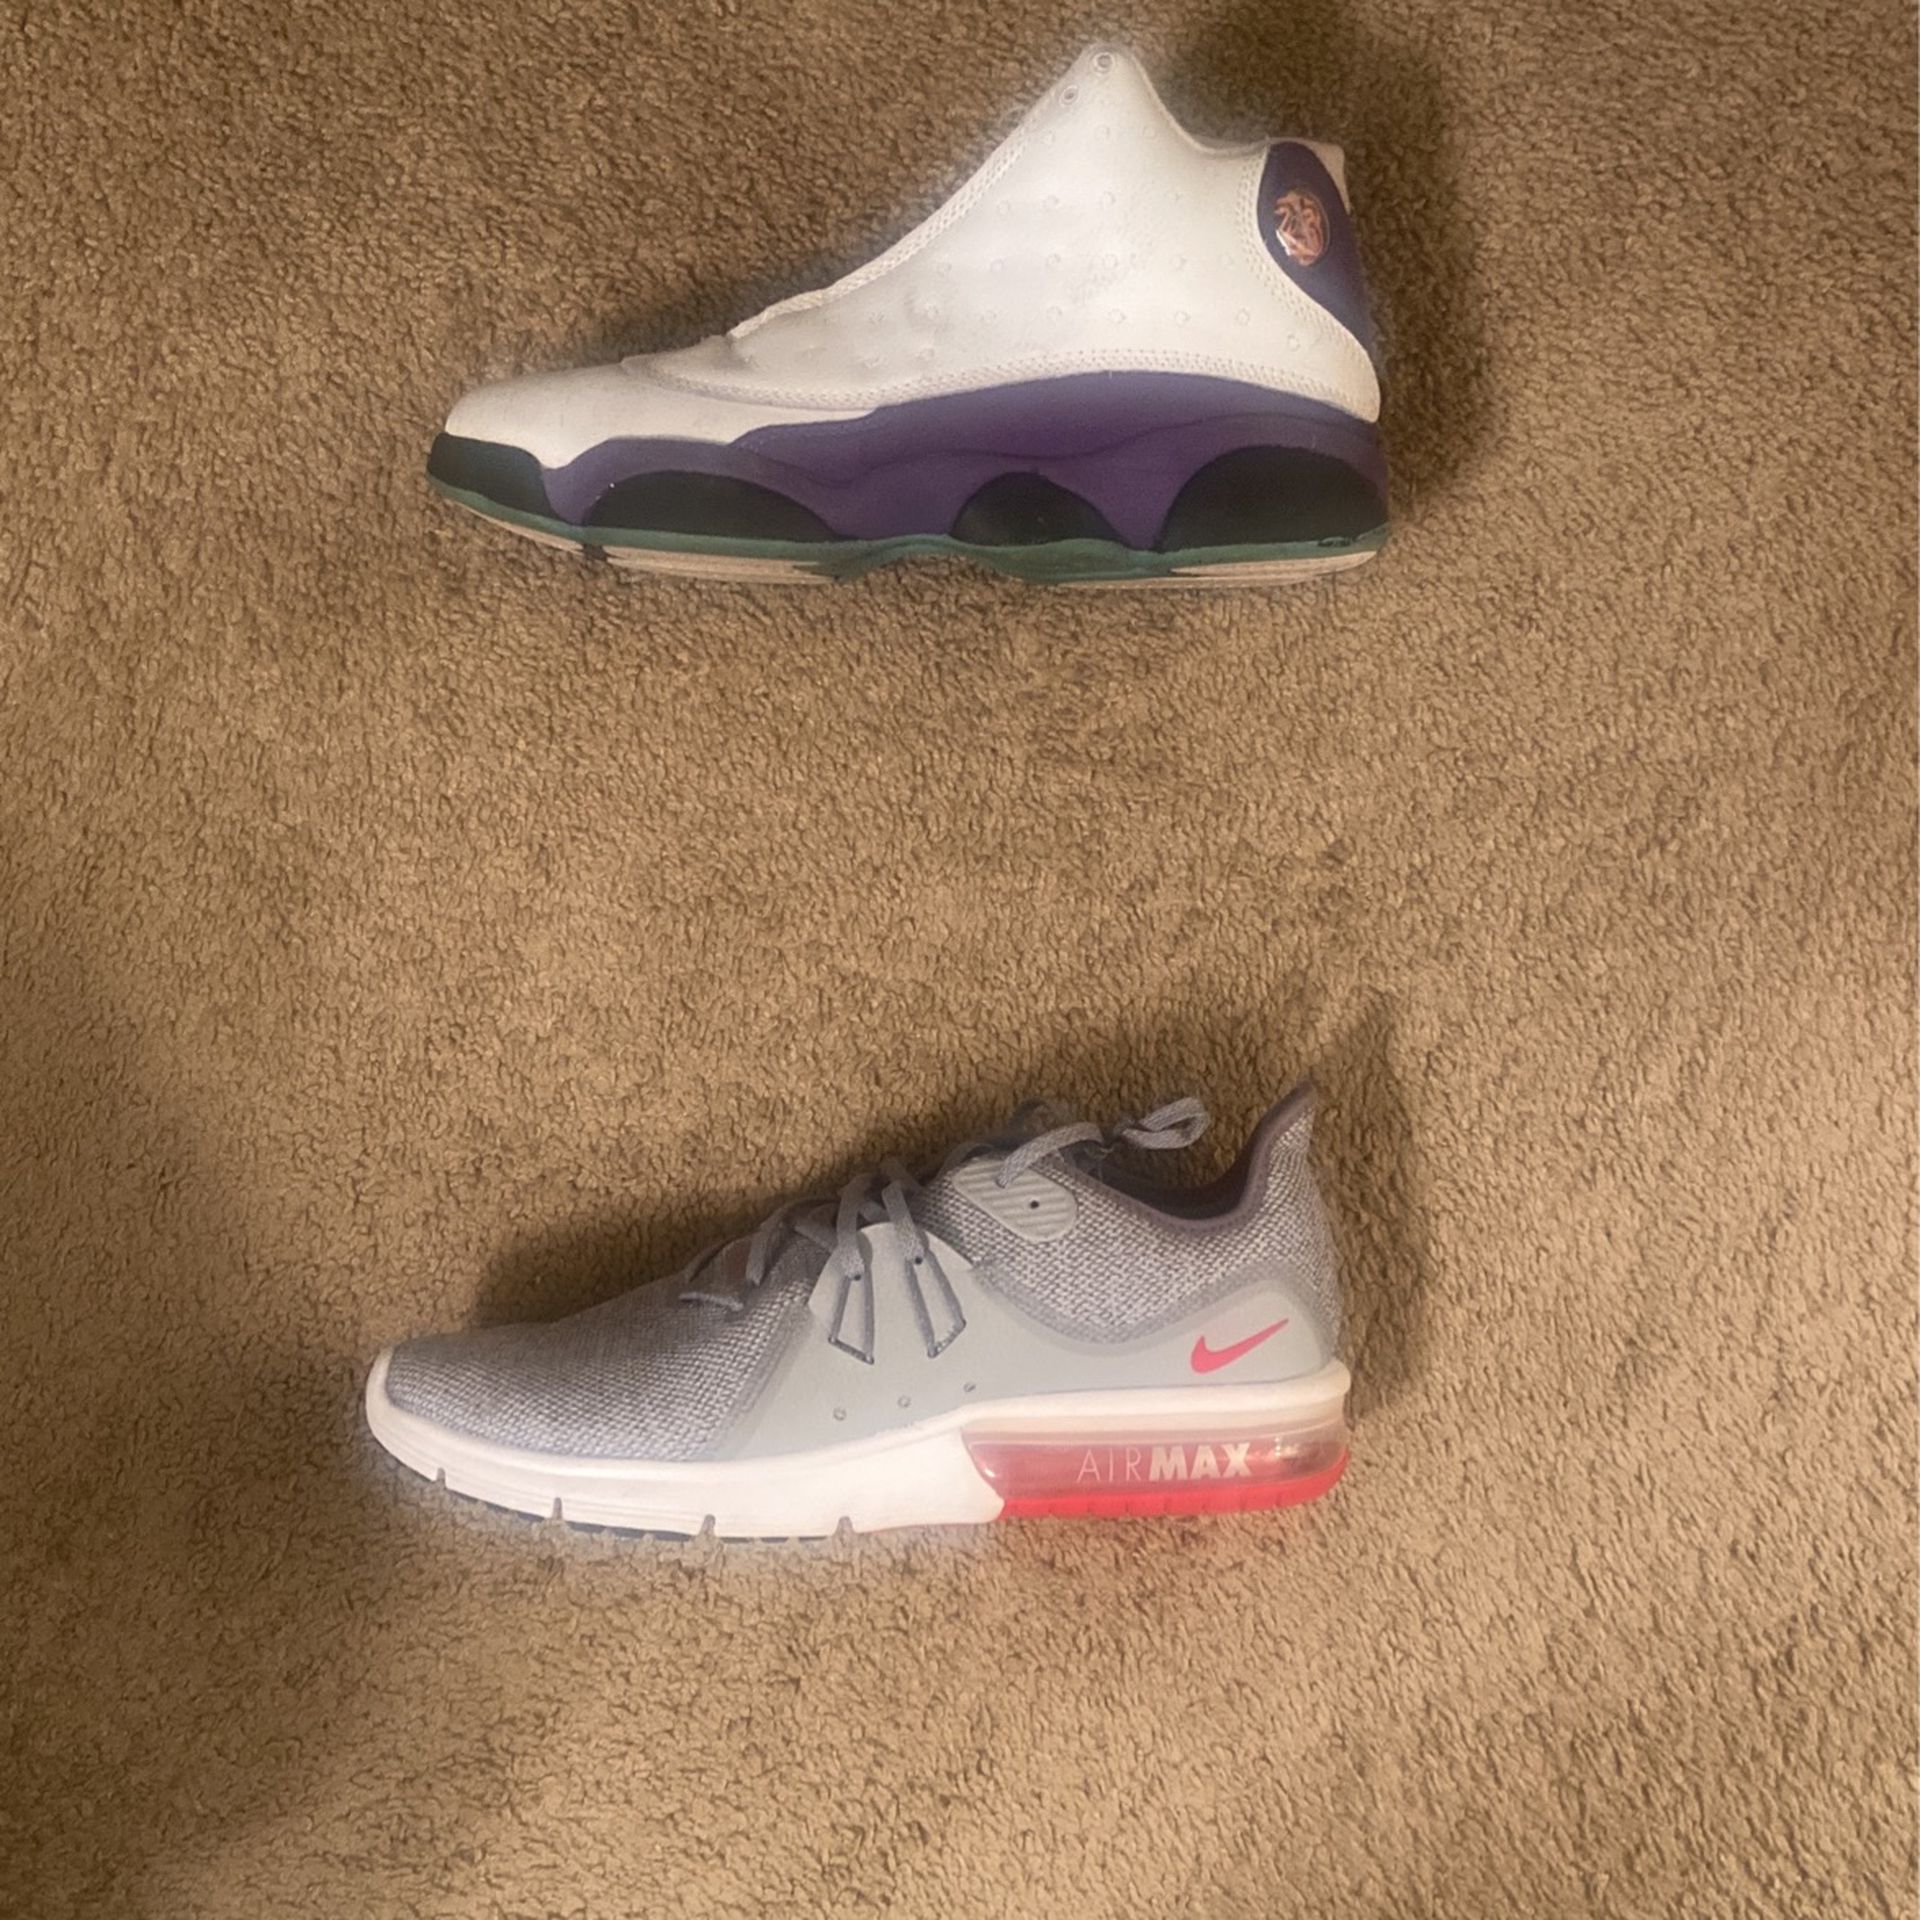 Jordan 13 & Nike Airmax